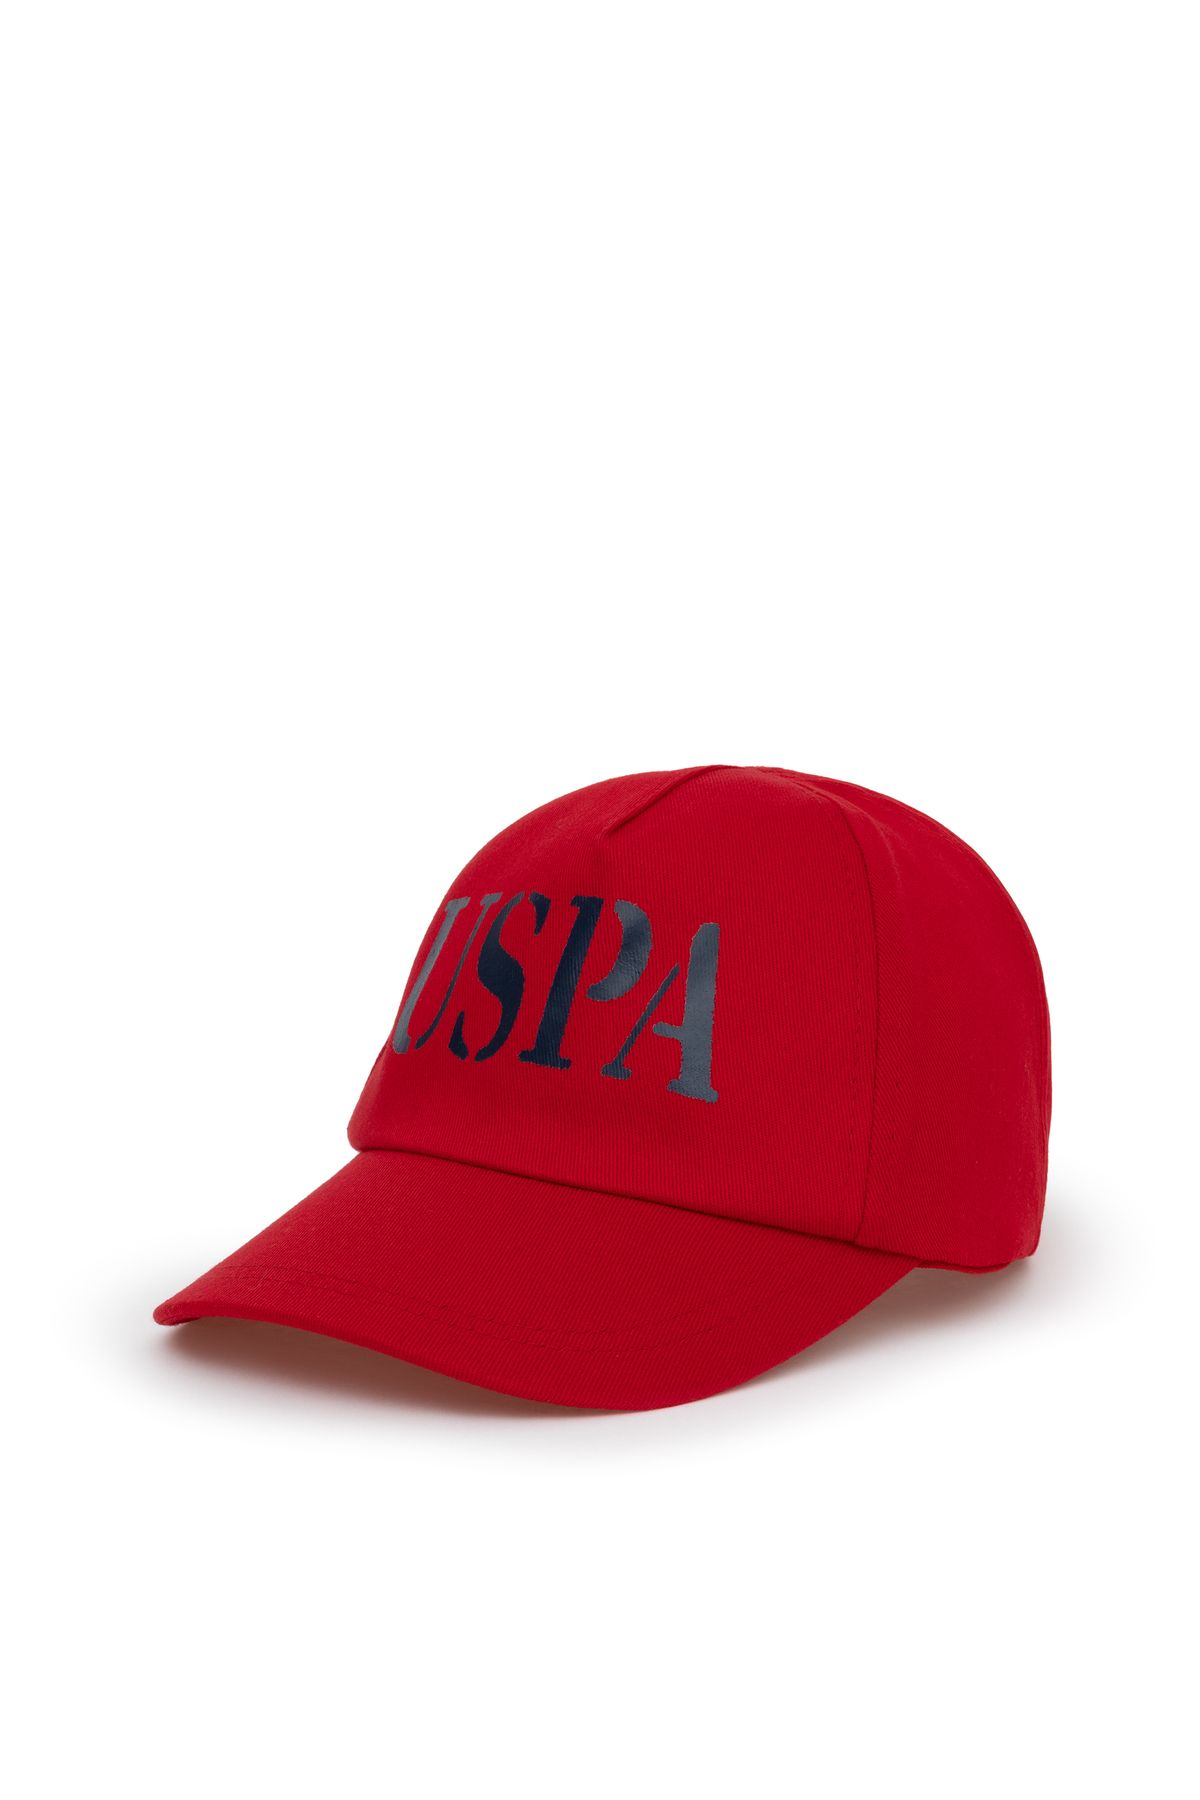 U.S. Polo Assn. Erkek Kırmızı Şapka  Arkası Cırtlı Ayarlanabilir A081SZ064.P01.DELL-IY23.VR030